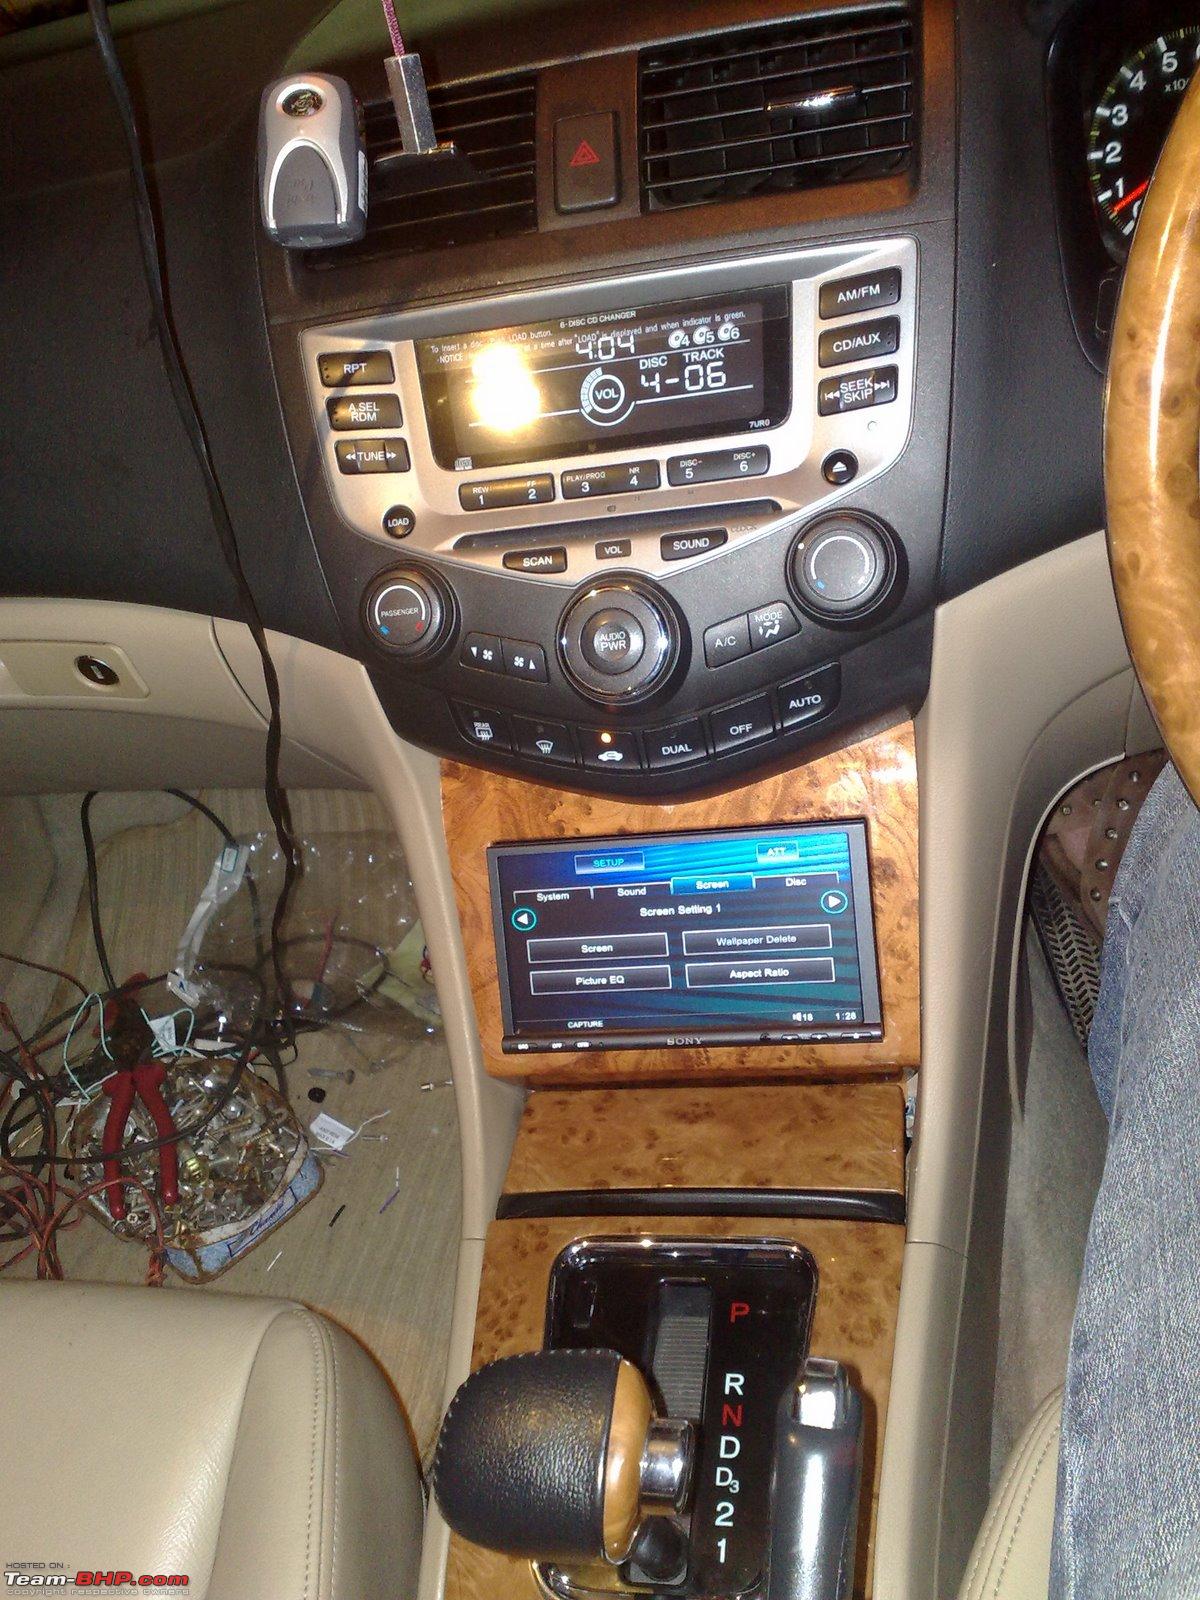 2004 Honda accord stereo removal